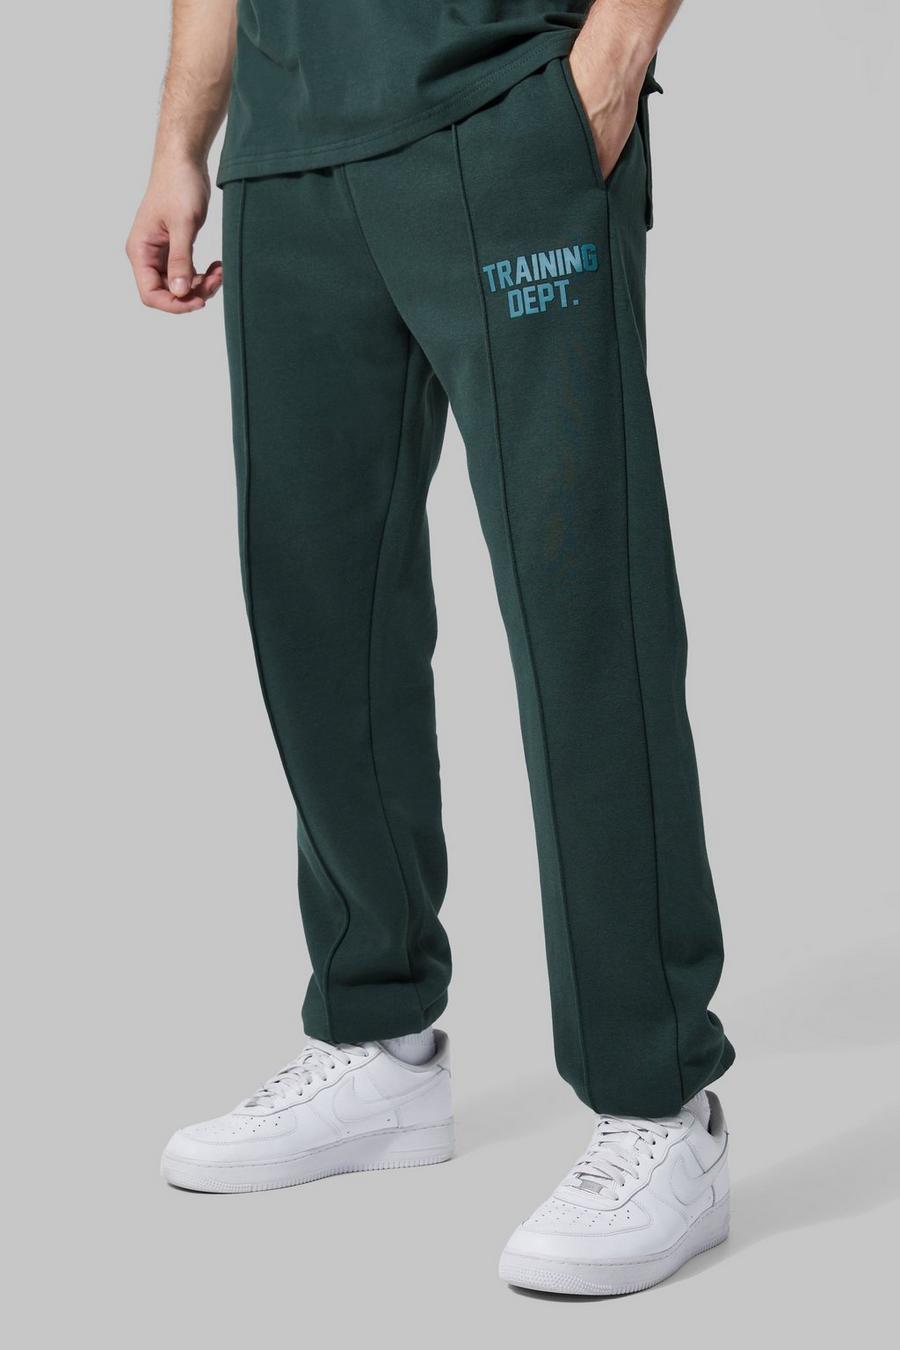 Pantalón deportivo Tall Active ajustado, Dark green verde